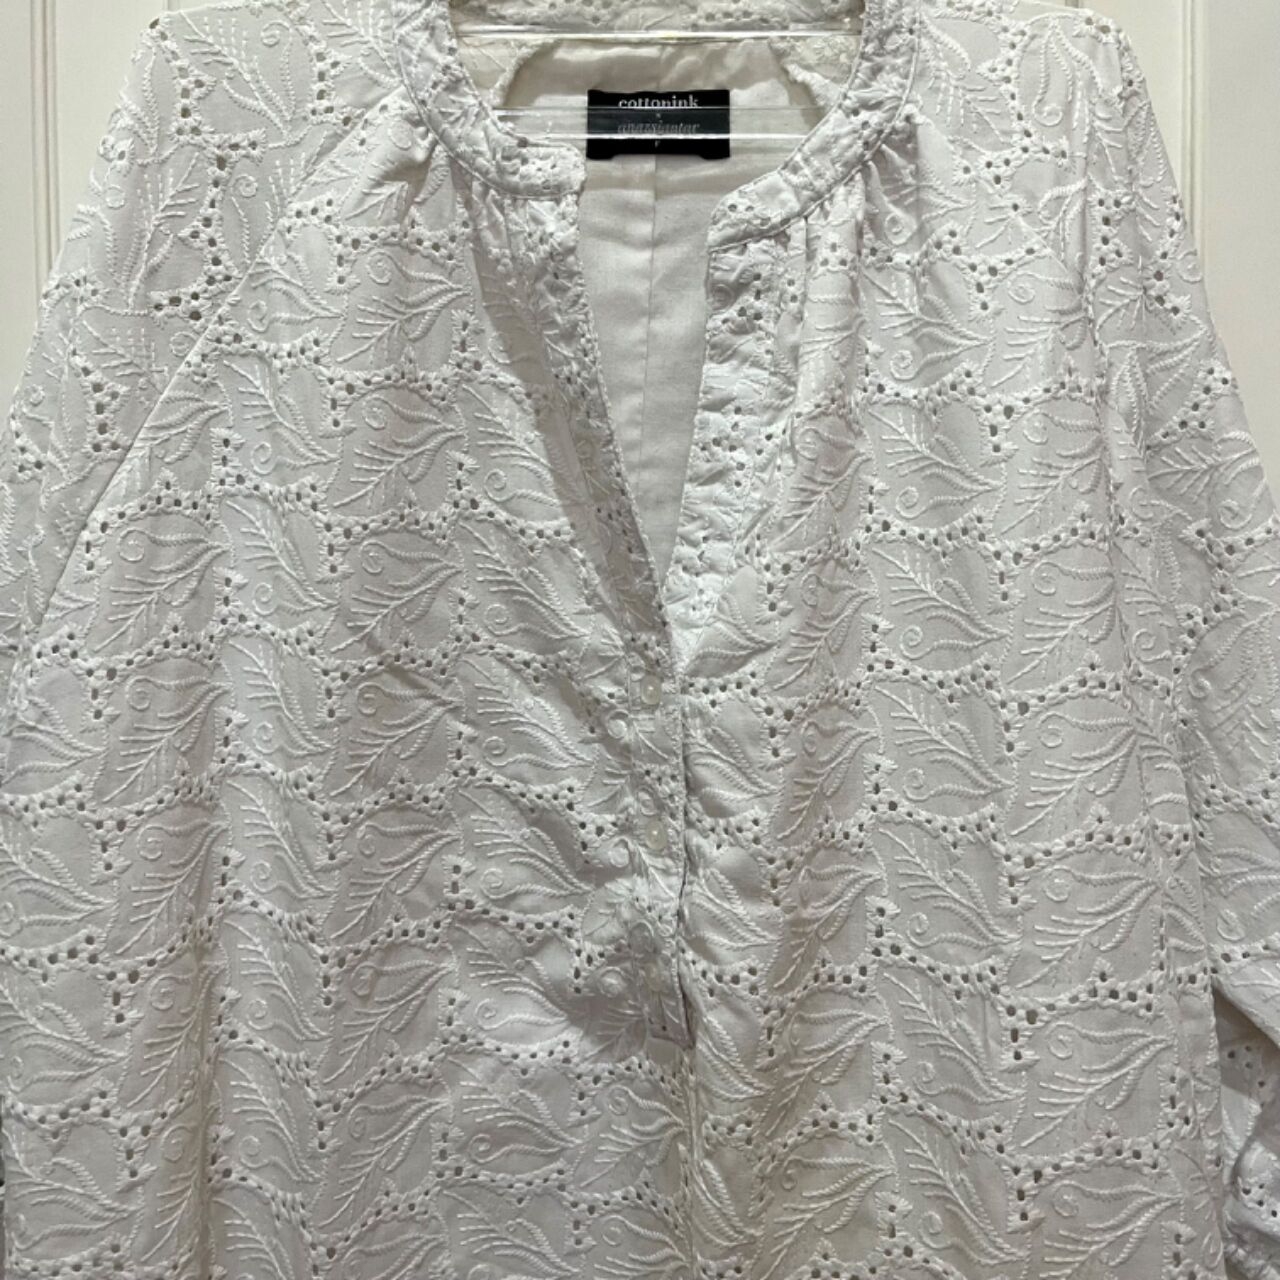 Cotton Ink X Anaz Siantar White Midi Dress